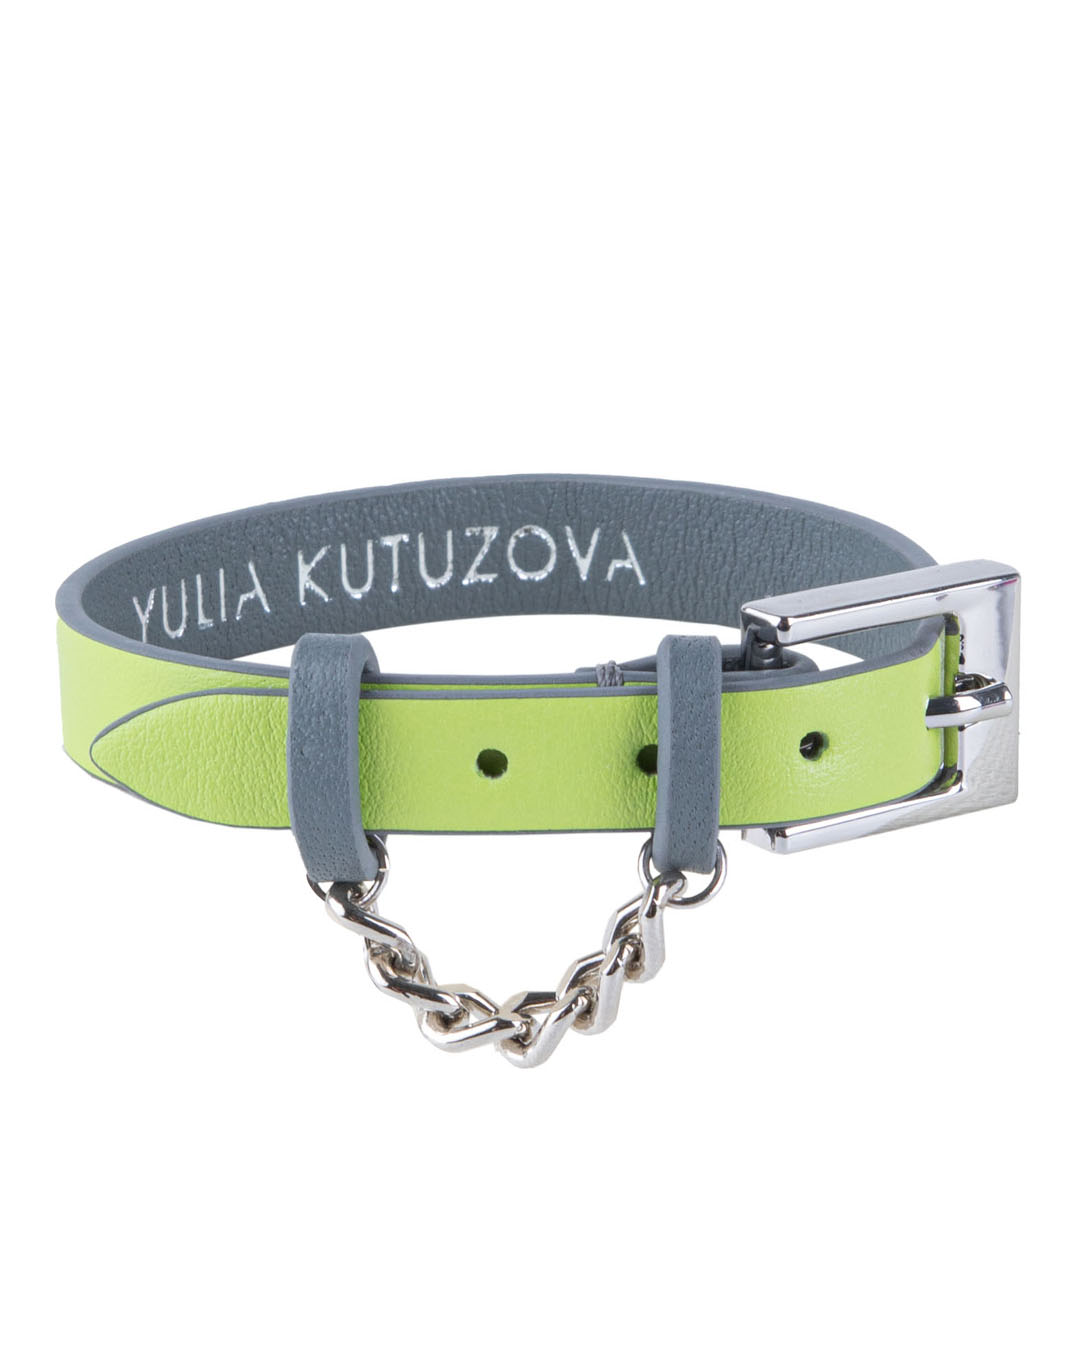 YULIA KUTUZOVA CHAIN артикул BR01-13 марки YULIA KUTUZOVA купить за 2900 руб.